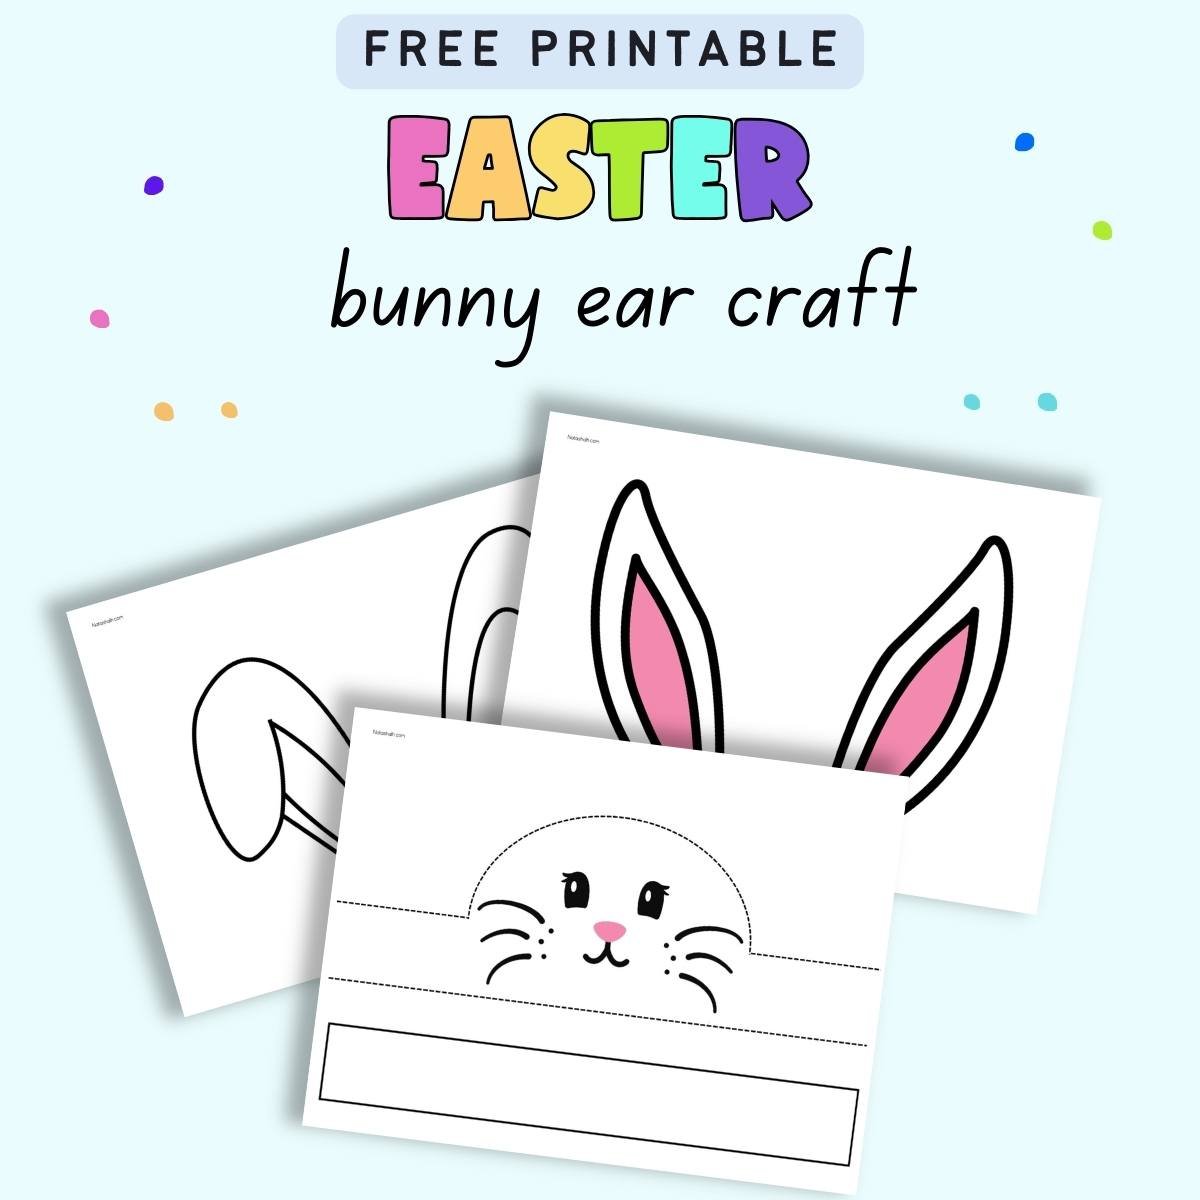 Text "free printable Easter bunny ear craft" with an image of three pages of printable Easter bunny headband craft